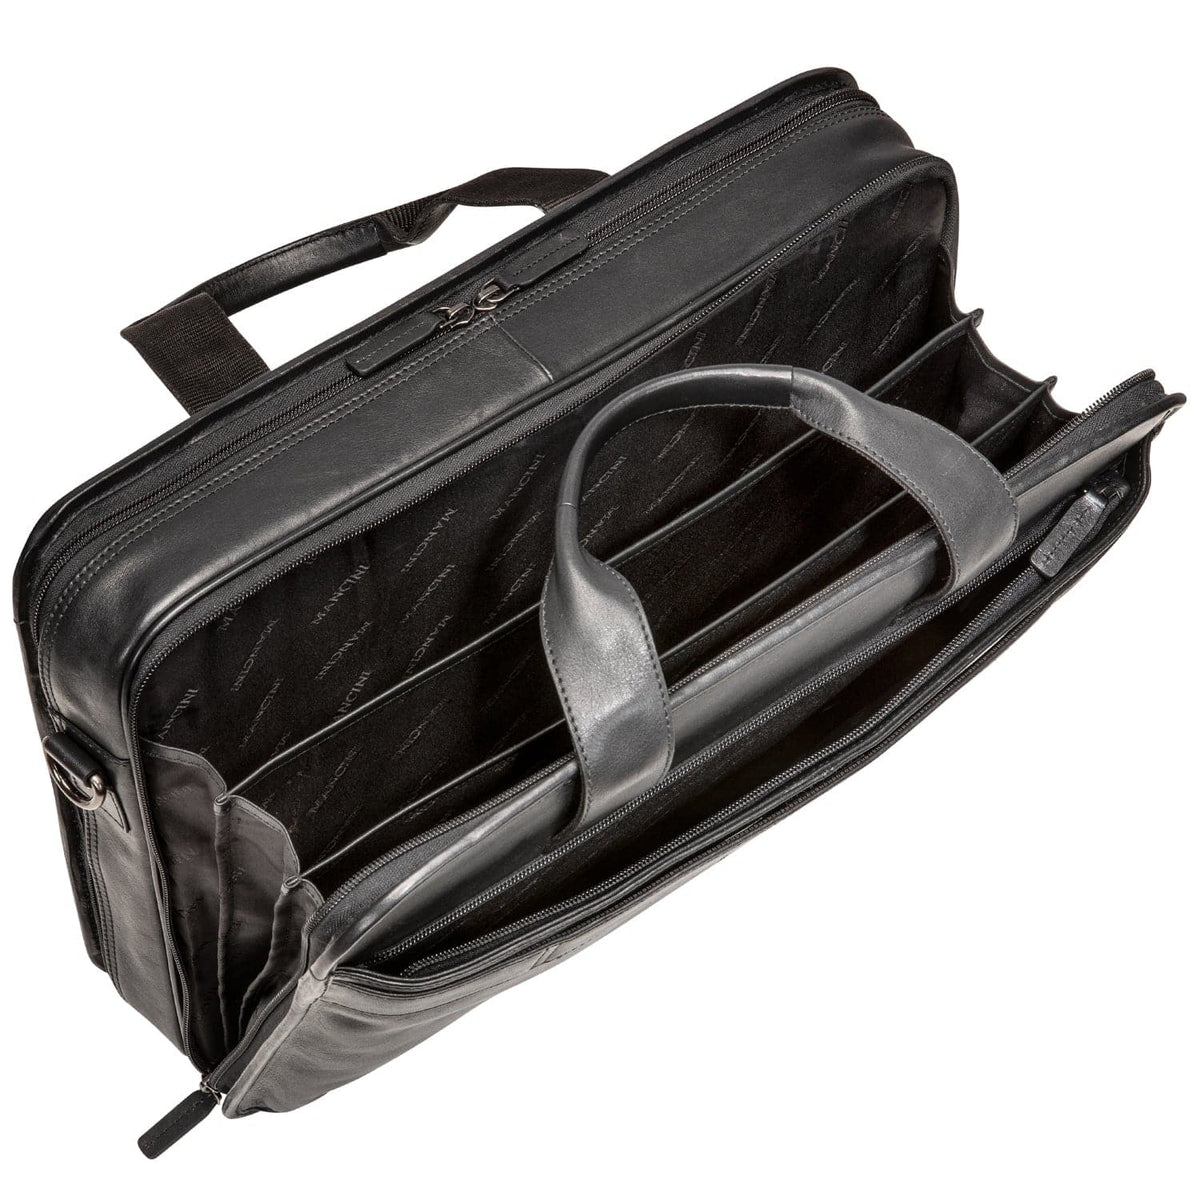 Mancini Milan Double Compartment Top Zipper 15.6” Laptop / Tablet Briefcase